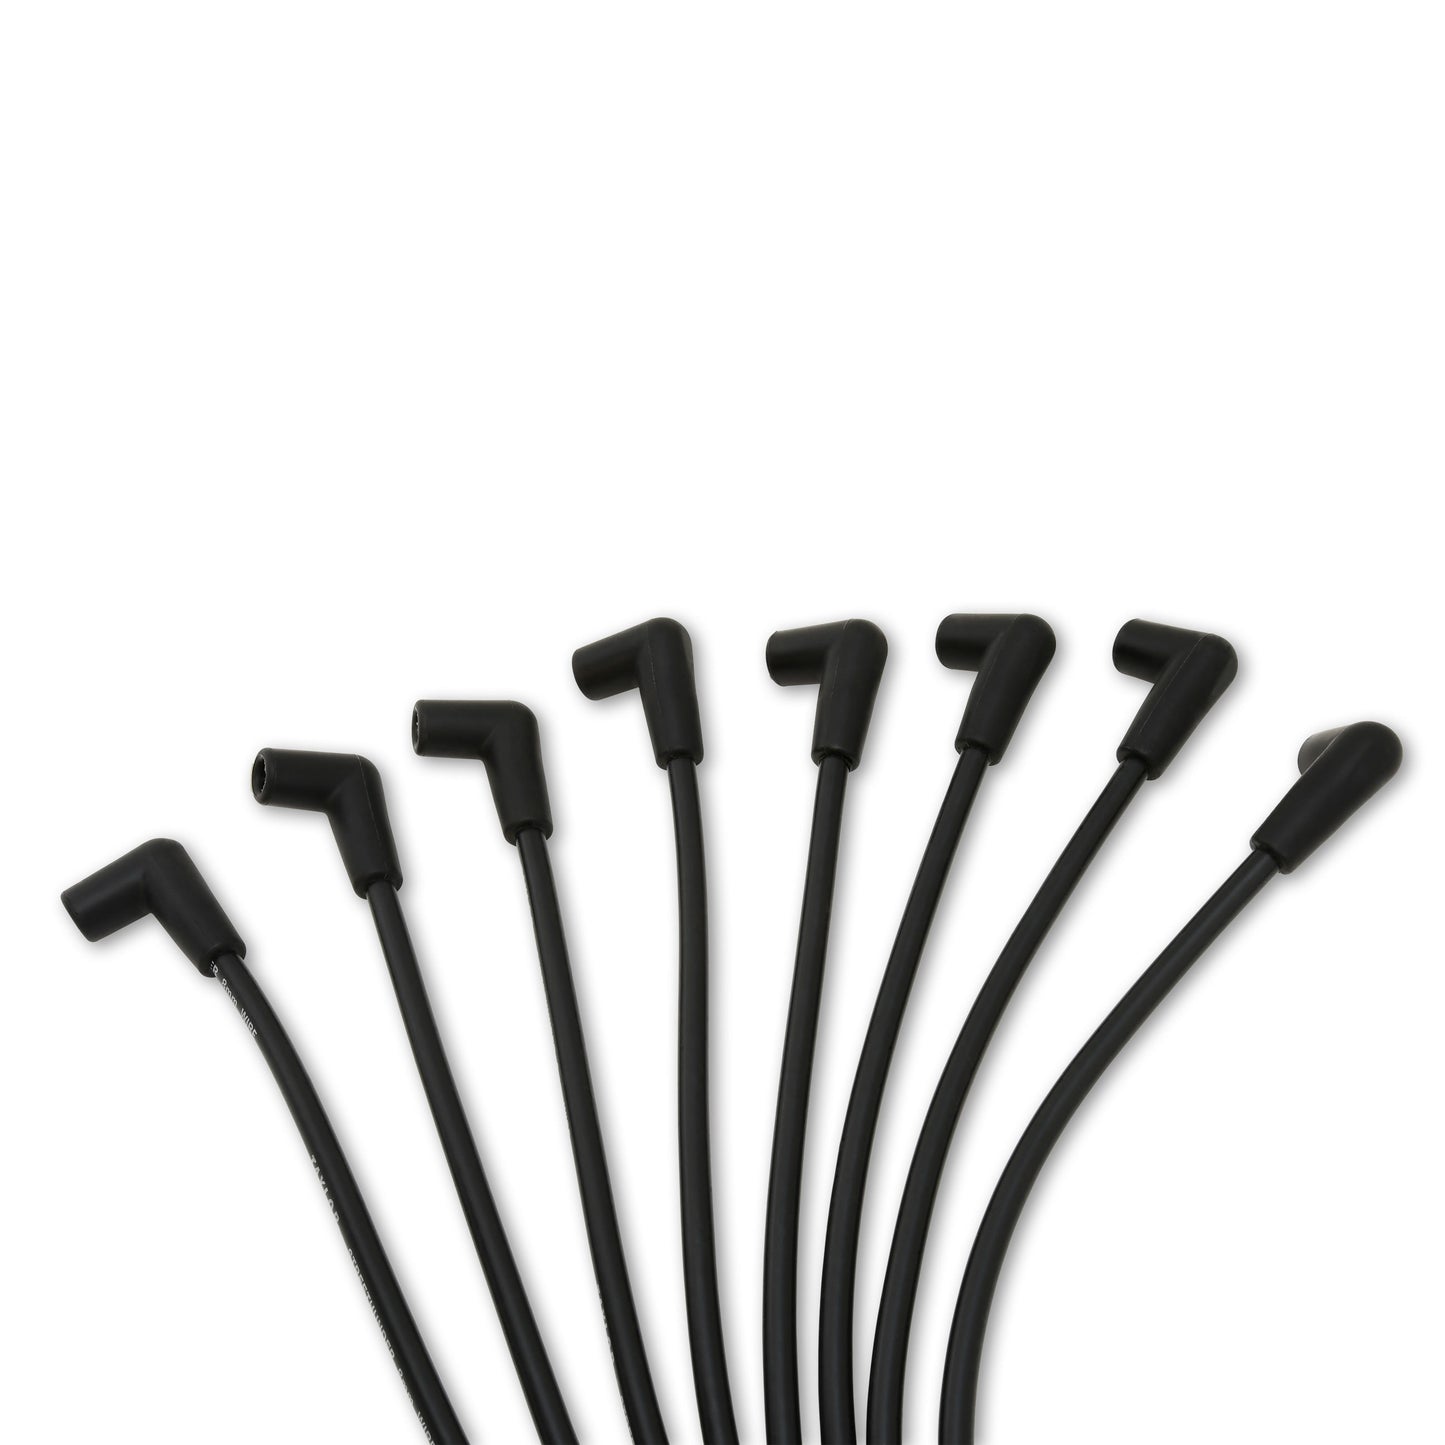 Taylor Cable 51036 8mm Streethunder Custom Spark Plug Wires 8 cyl black